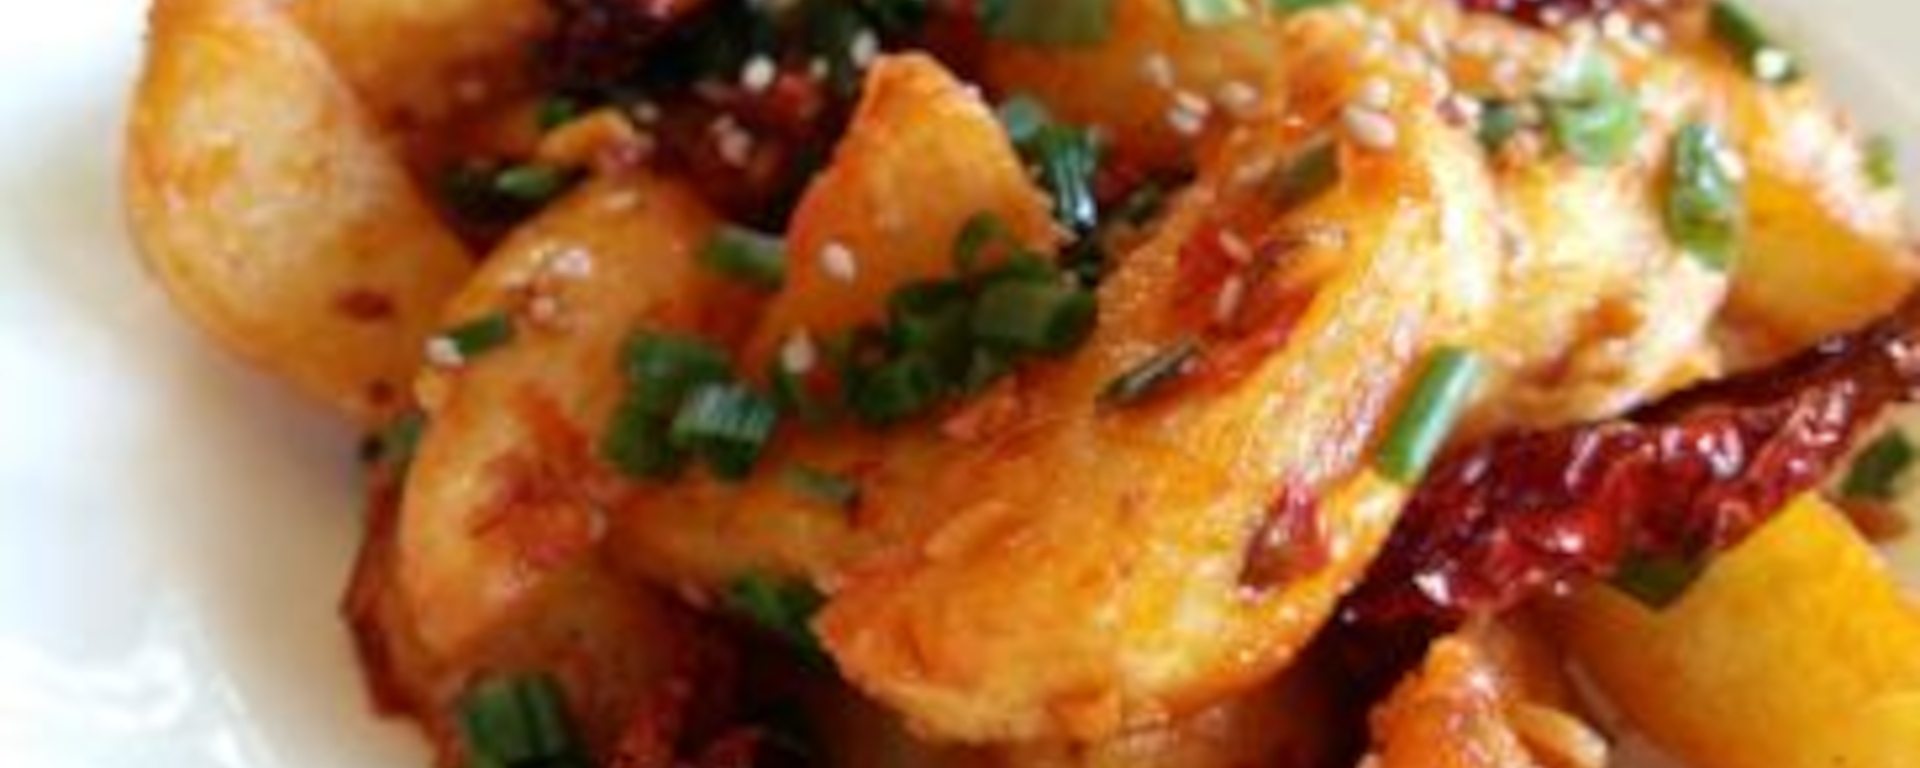 LuvMyRecipe.com - Crispy Fried Schezwan Potatoes featured